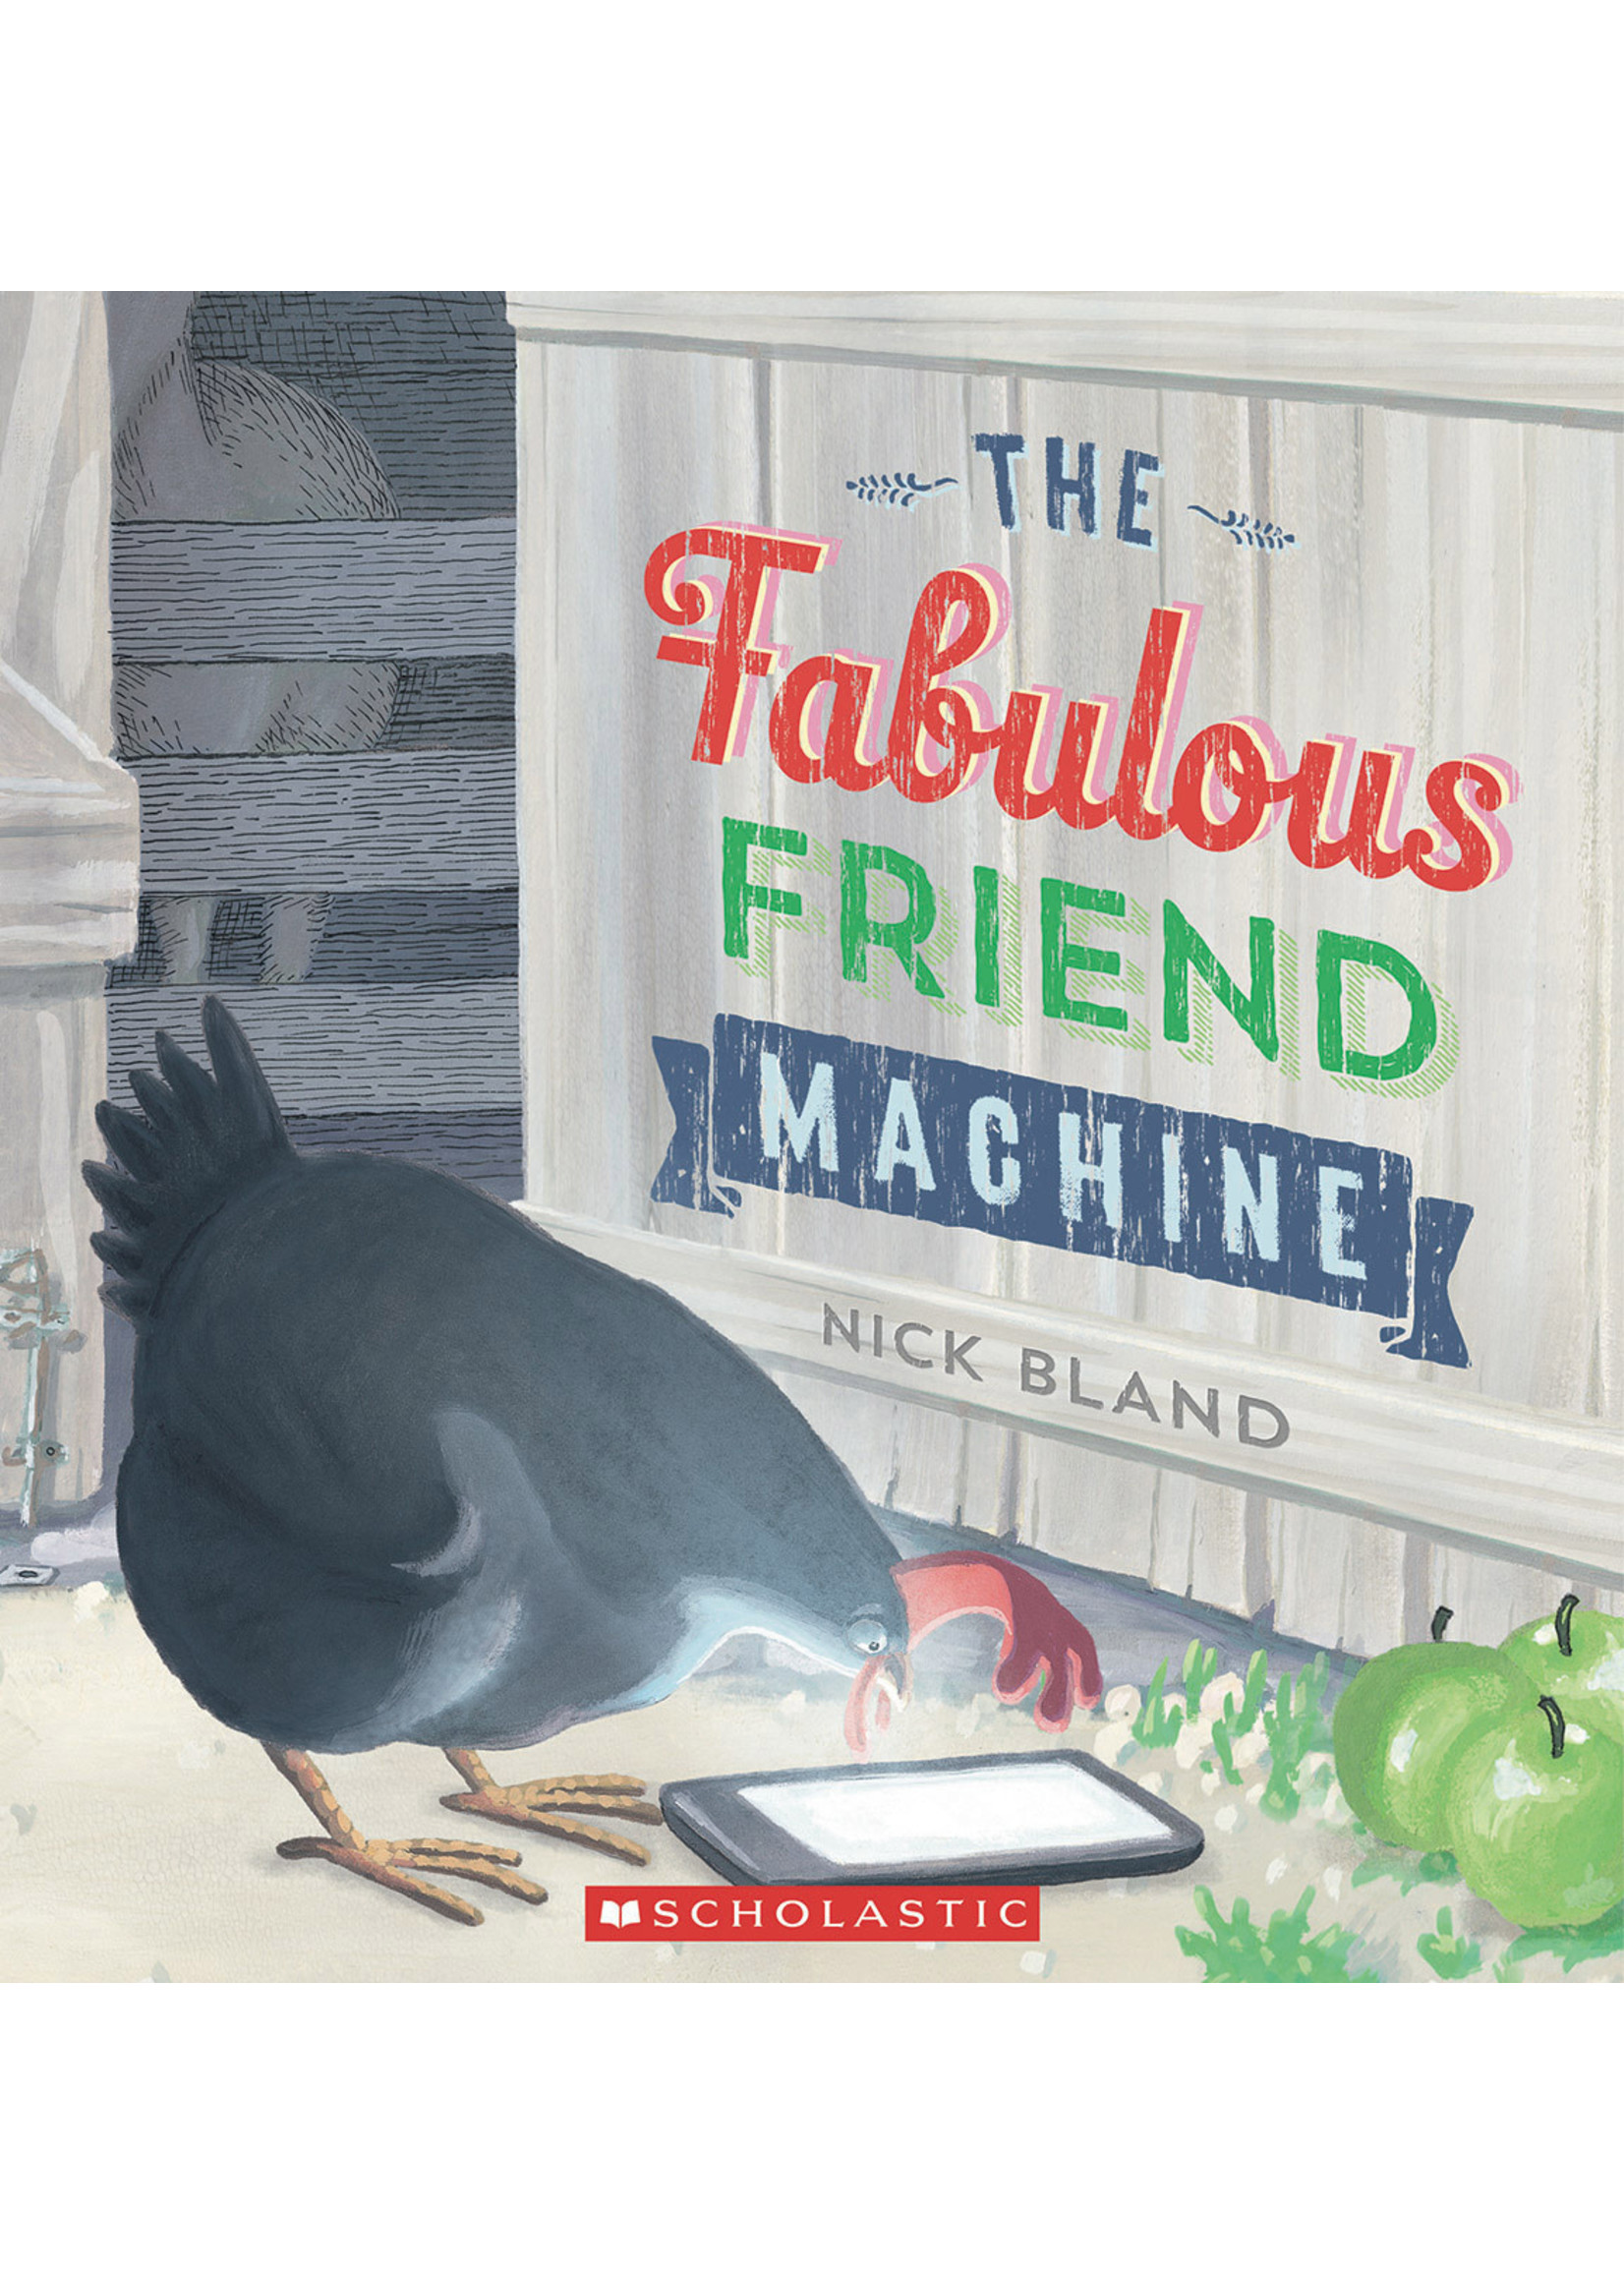 The Fabulous Friend Machine by Nick Bland